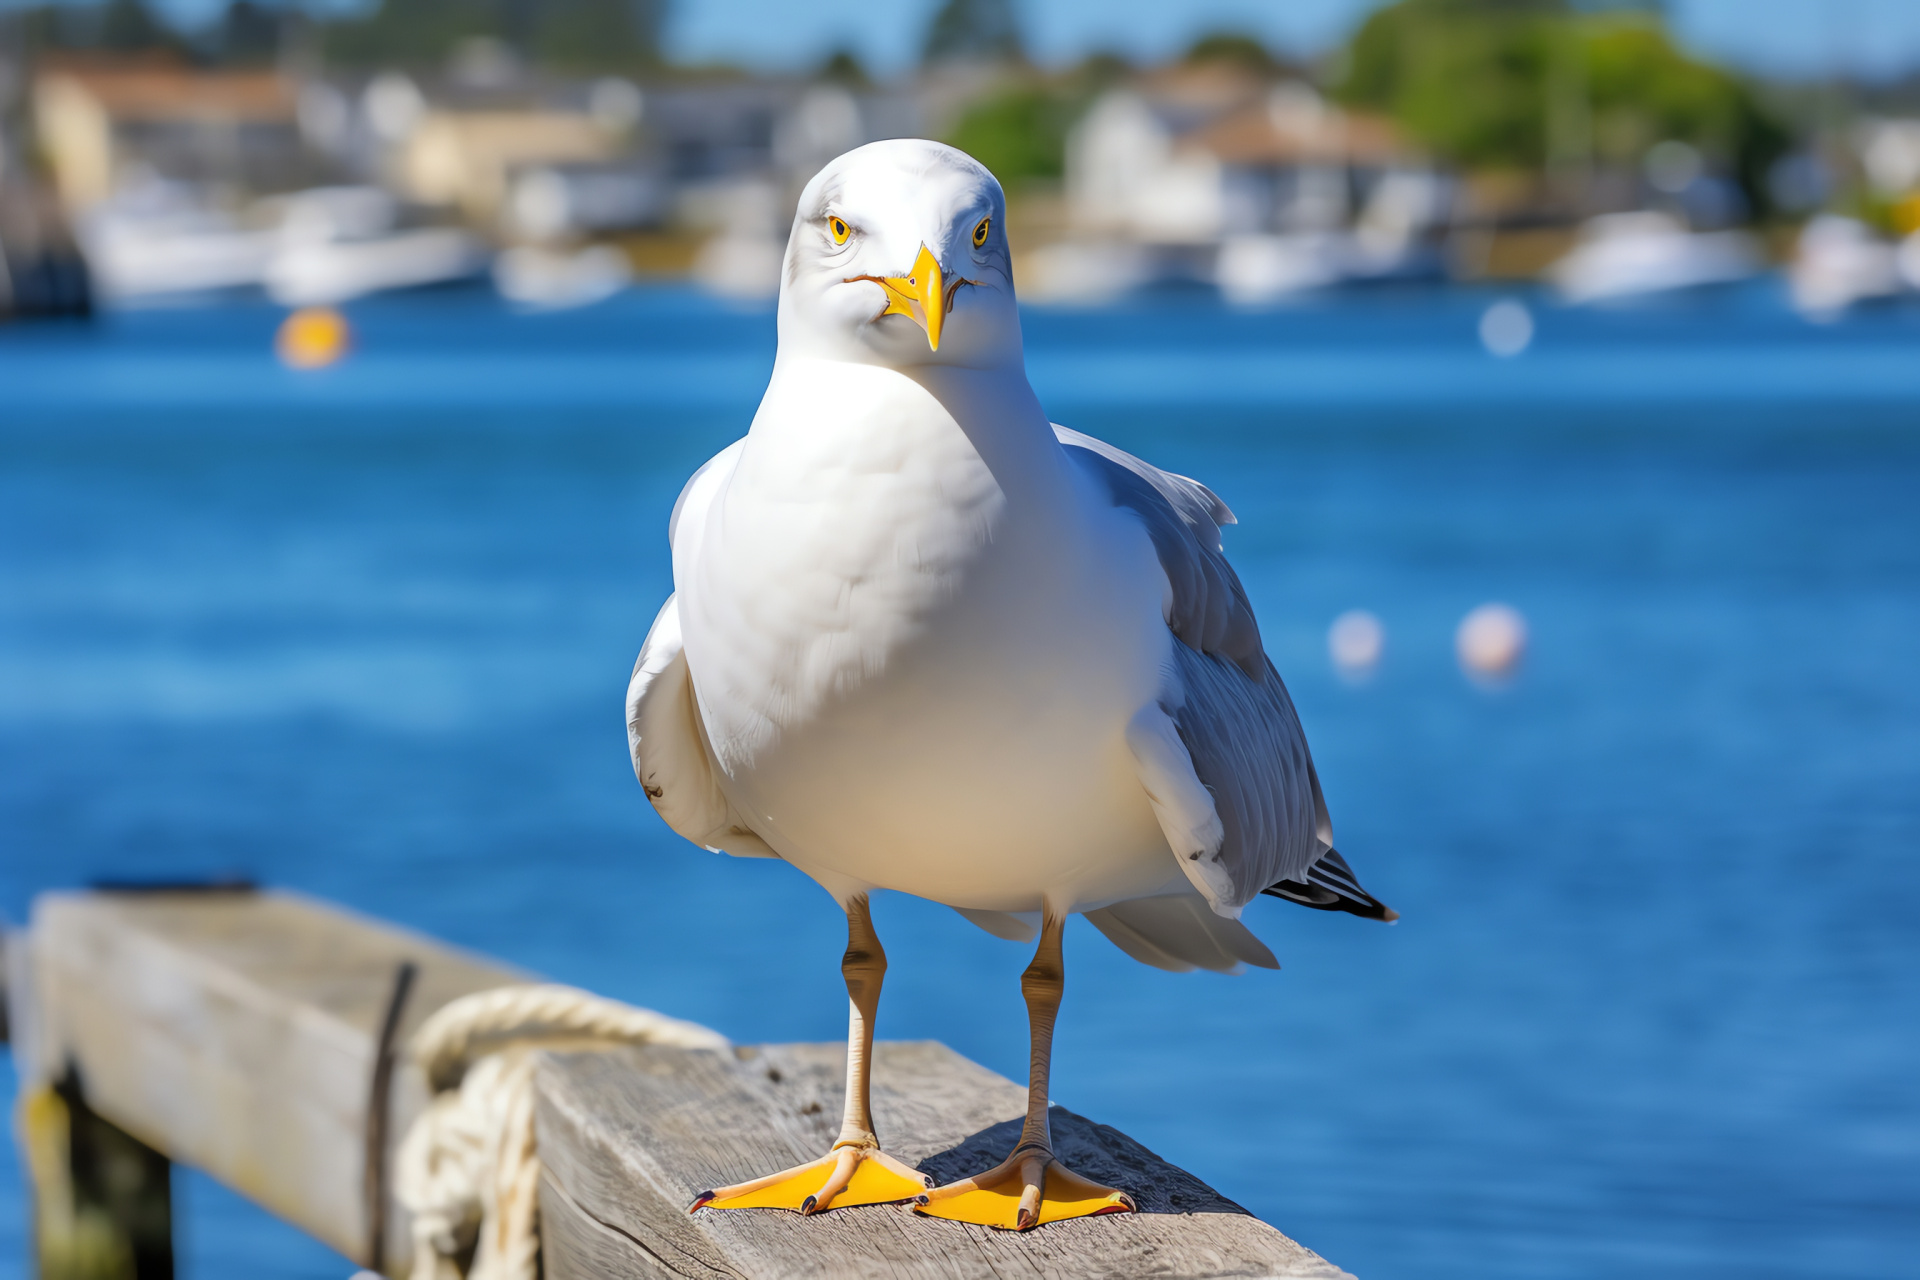 Seabird Seagull, coastal wildlife, avian gaze, maritime resting place, serene harbor atmosphere, HD Desktop Image